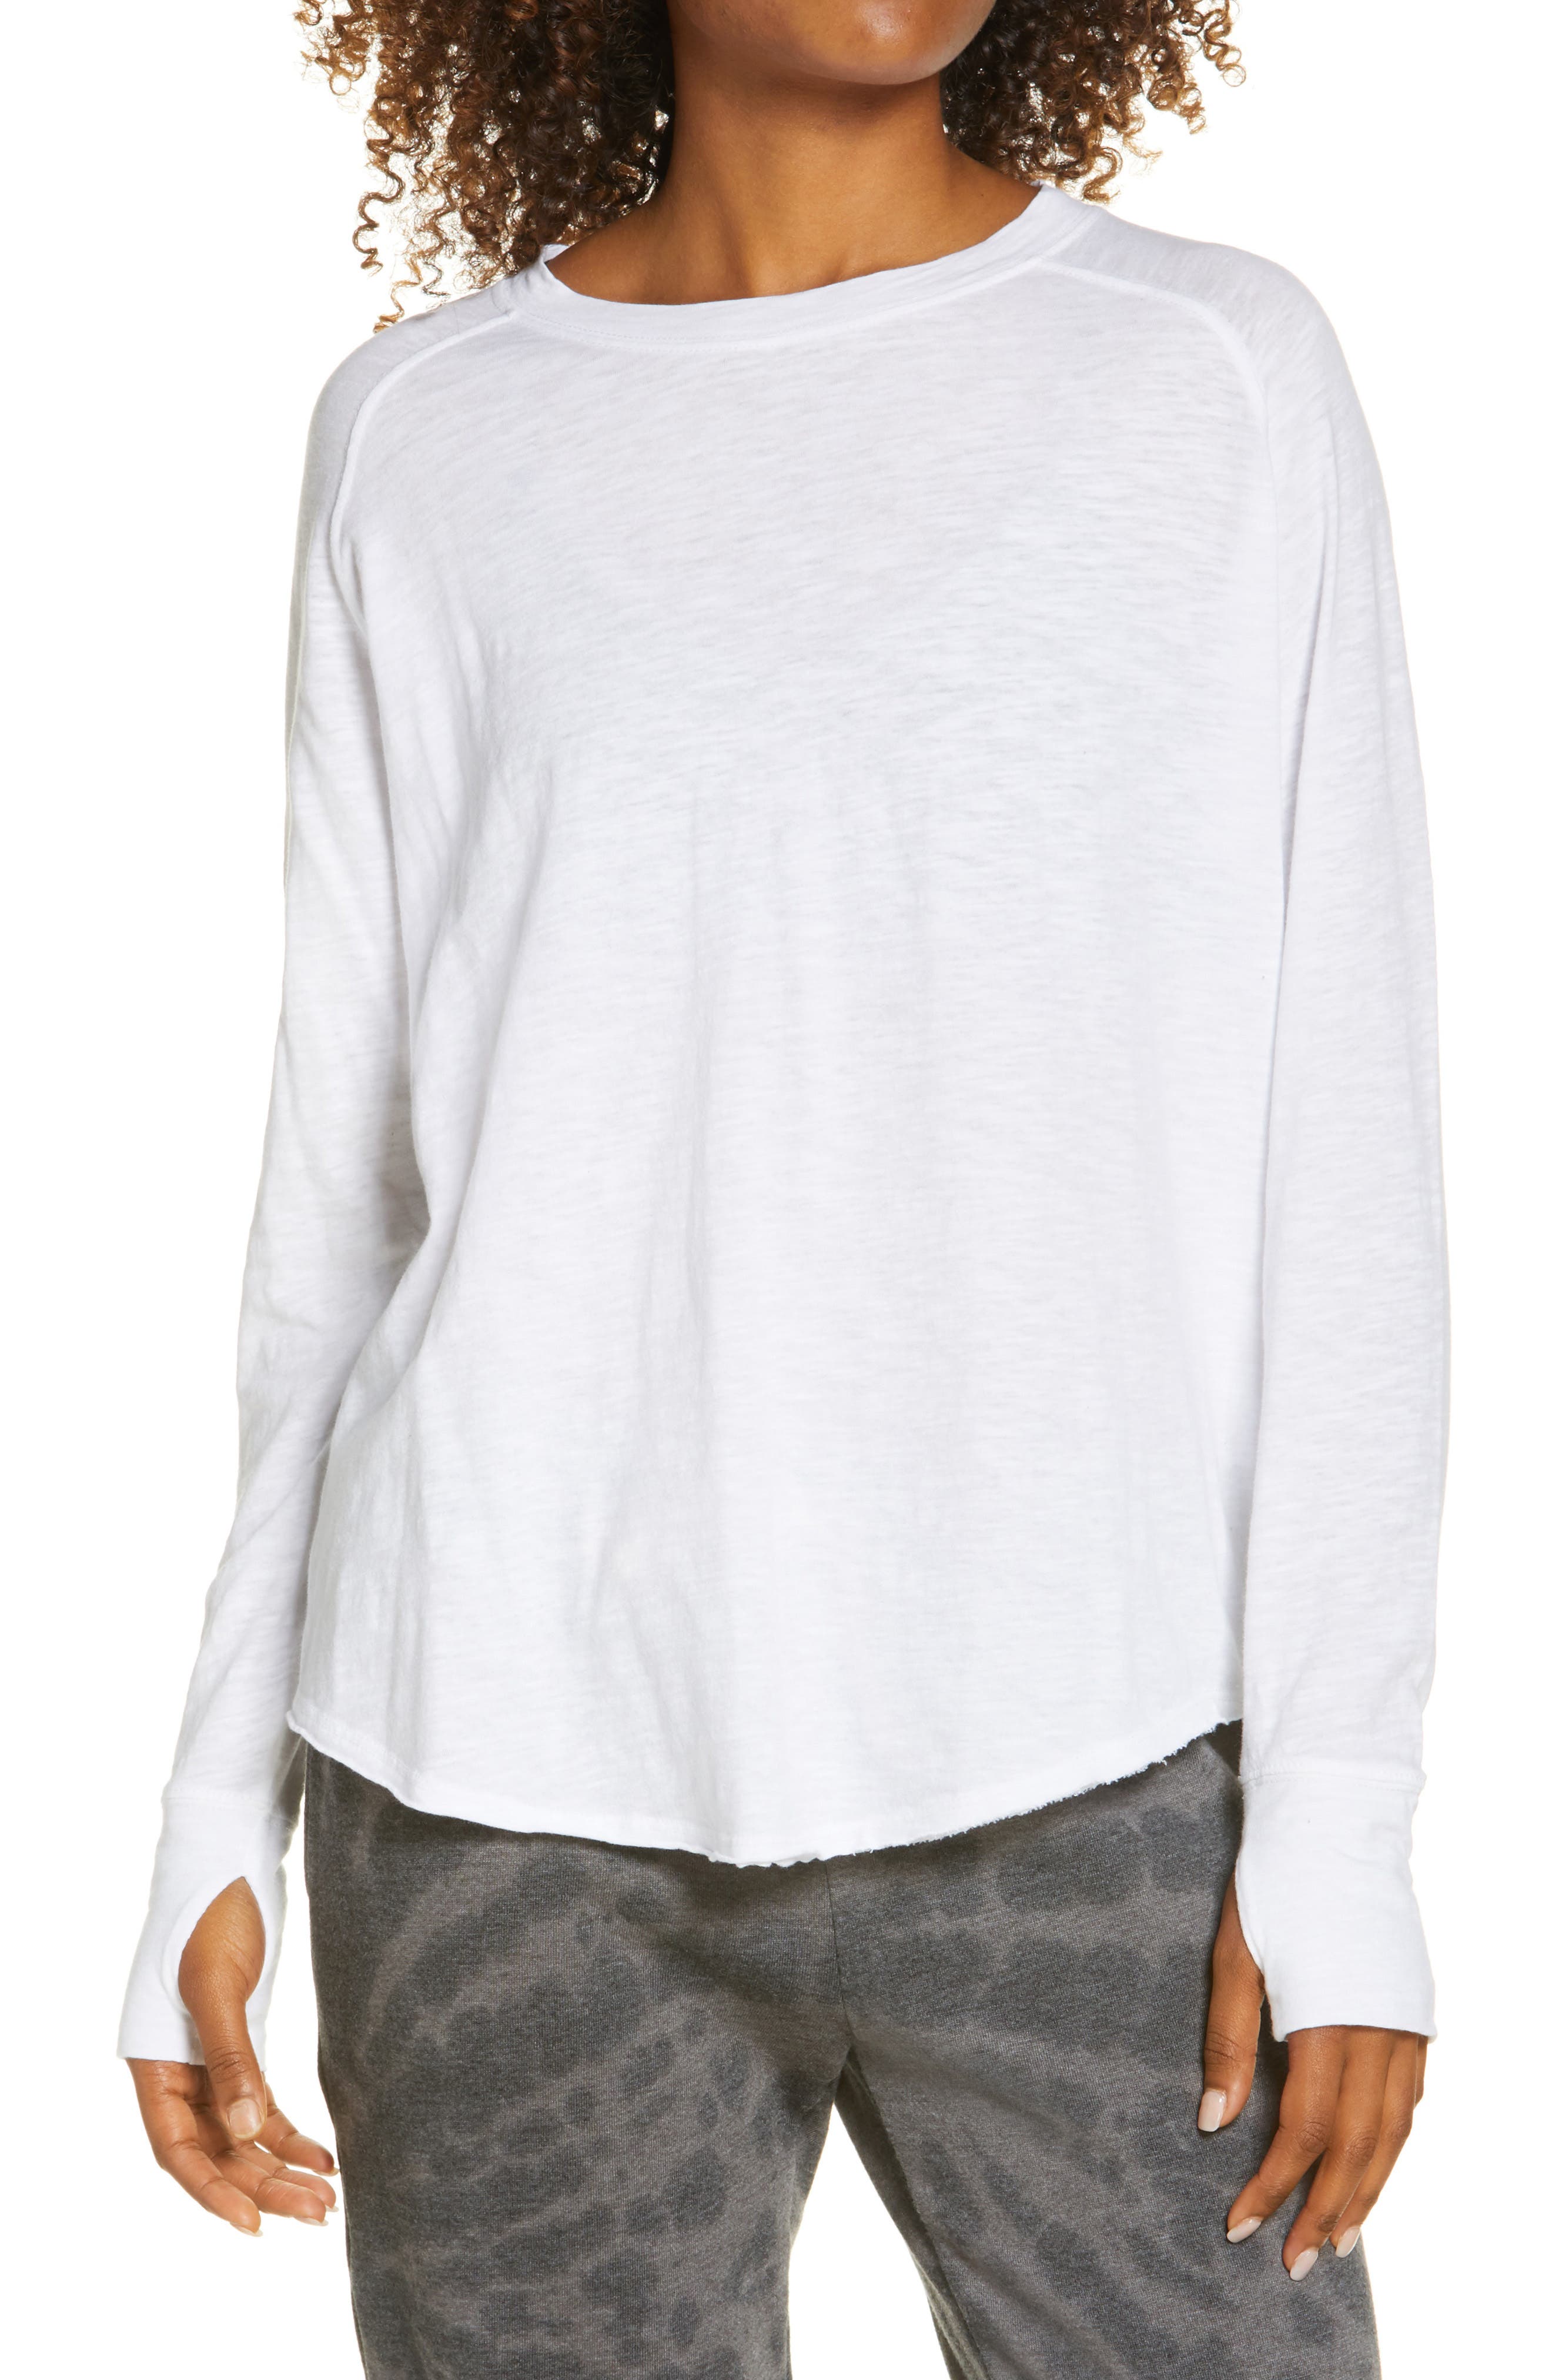 Women Round Neck Stripe Long Sleeve Sweatshirt Pullover Tops Blouse Jumper T Shirt Plain Vintage Ladies